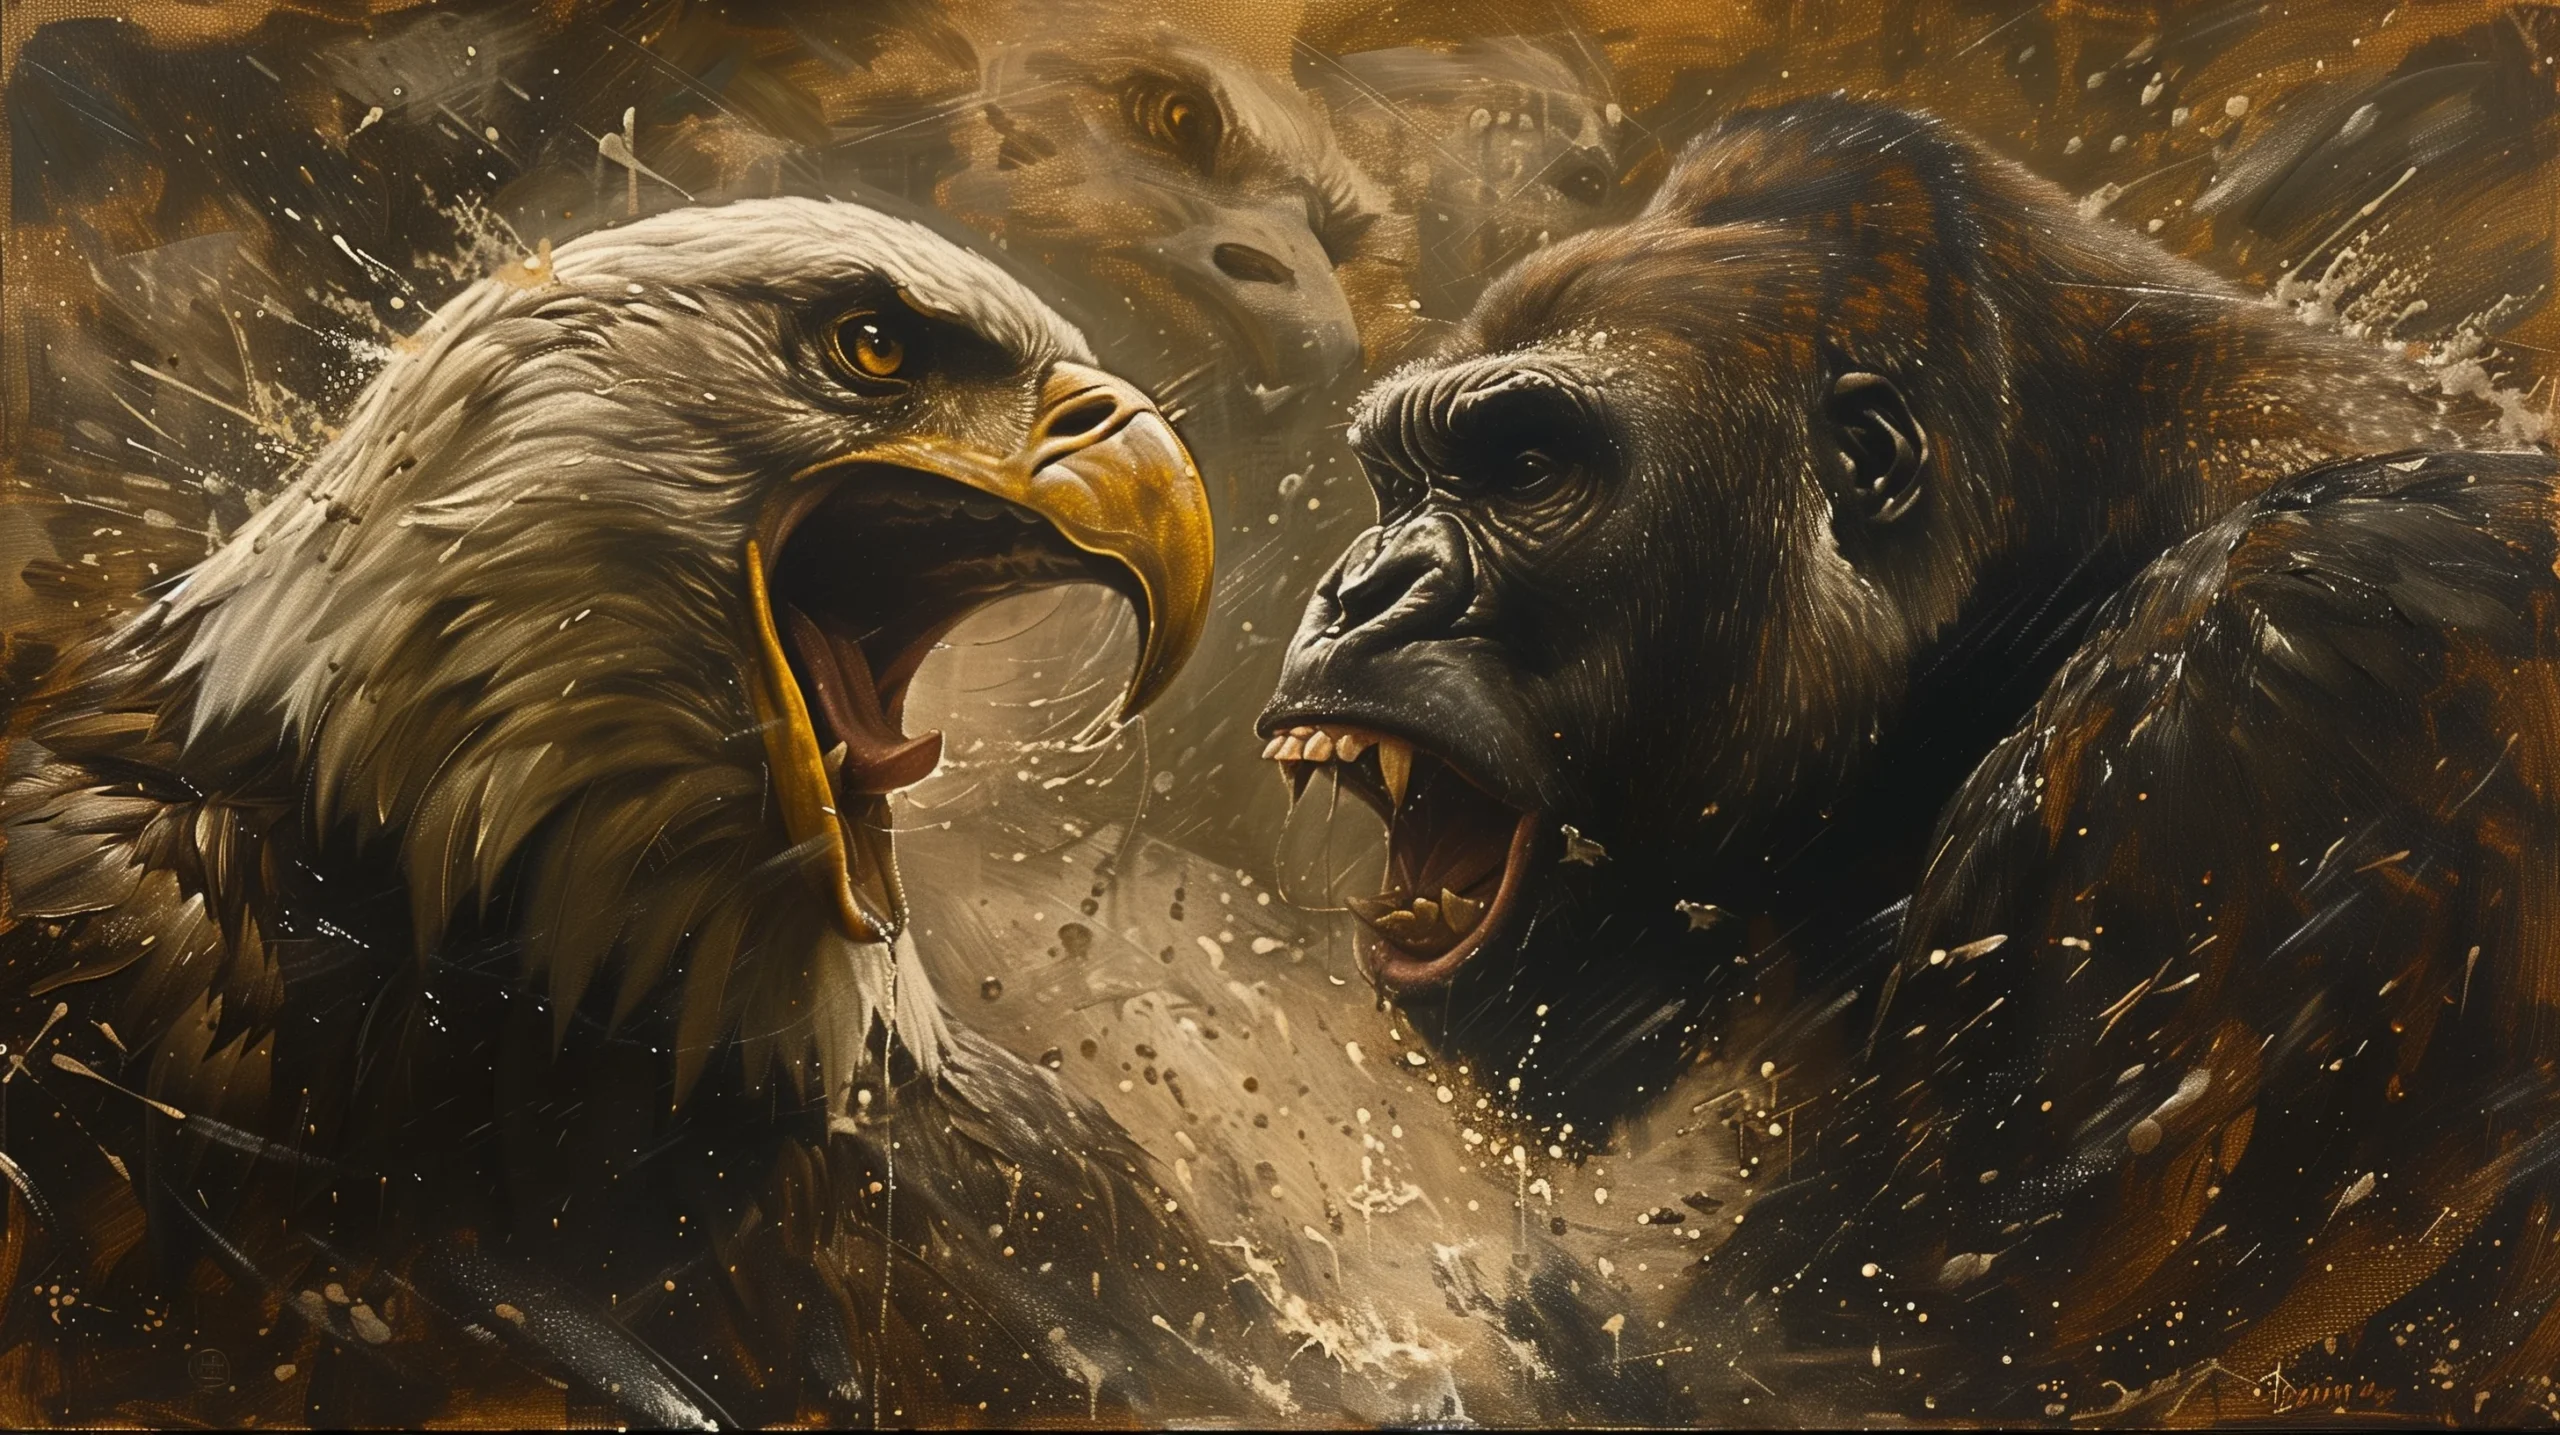 ic7zi_Eagle_fighting_gorilla_a_mythical_painting_901e0f8b-e8ba-457c-a6d4-c064bdbc8450